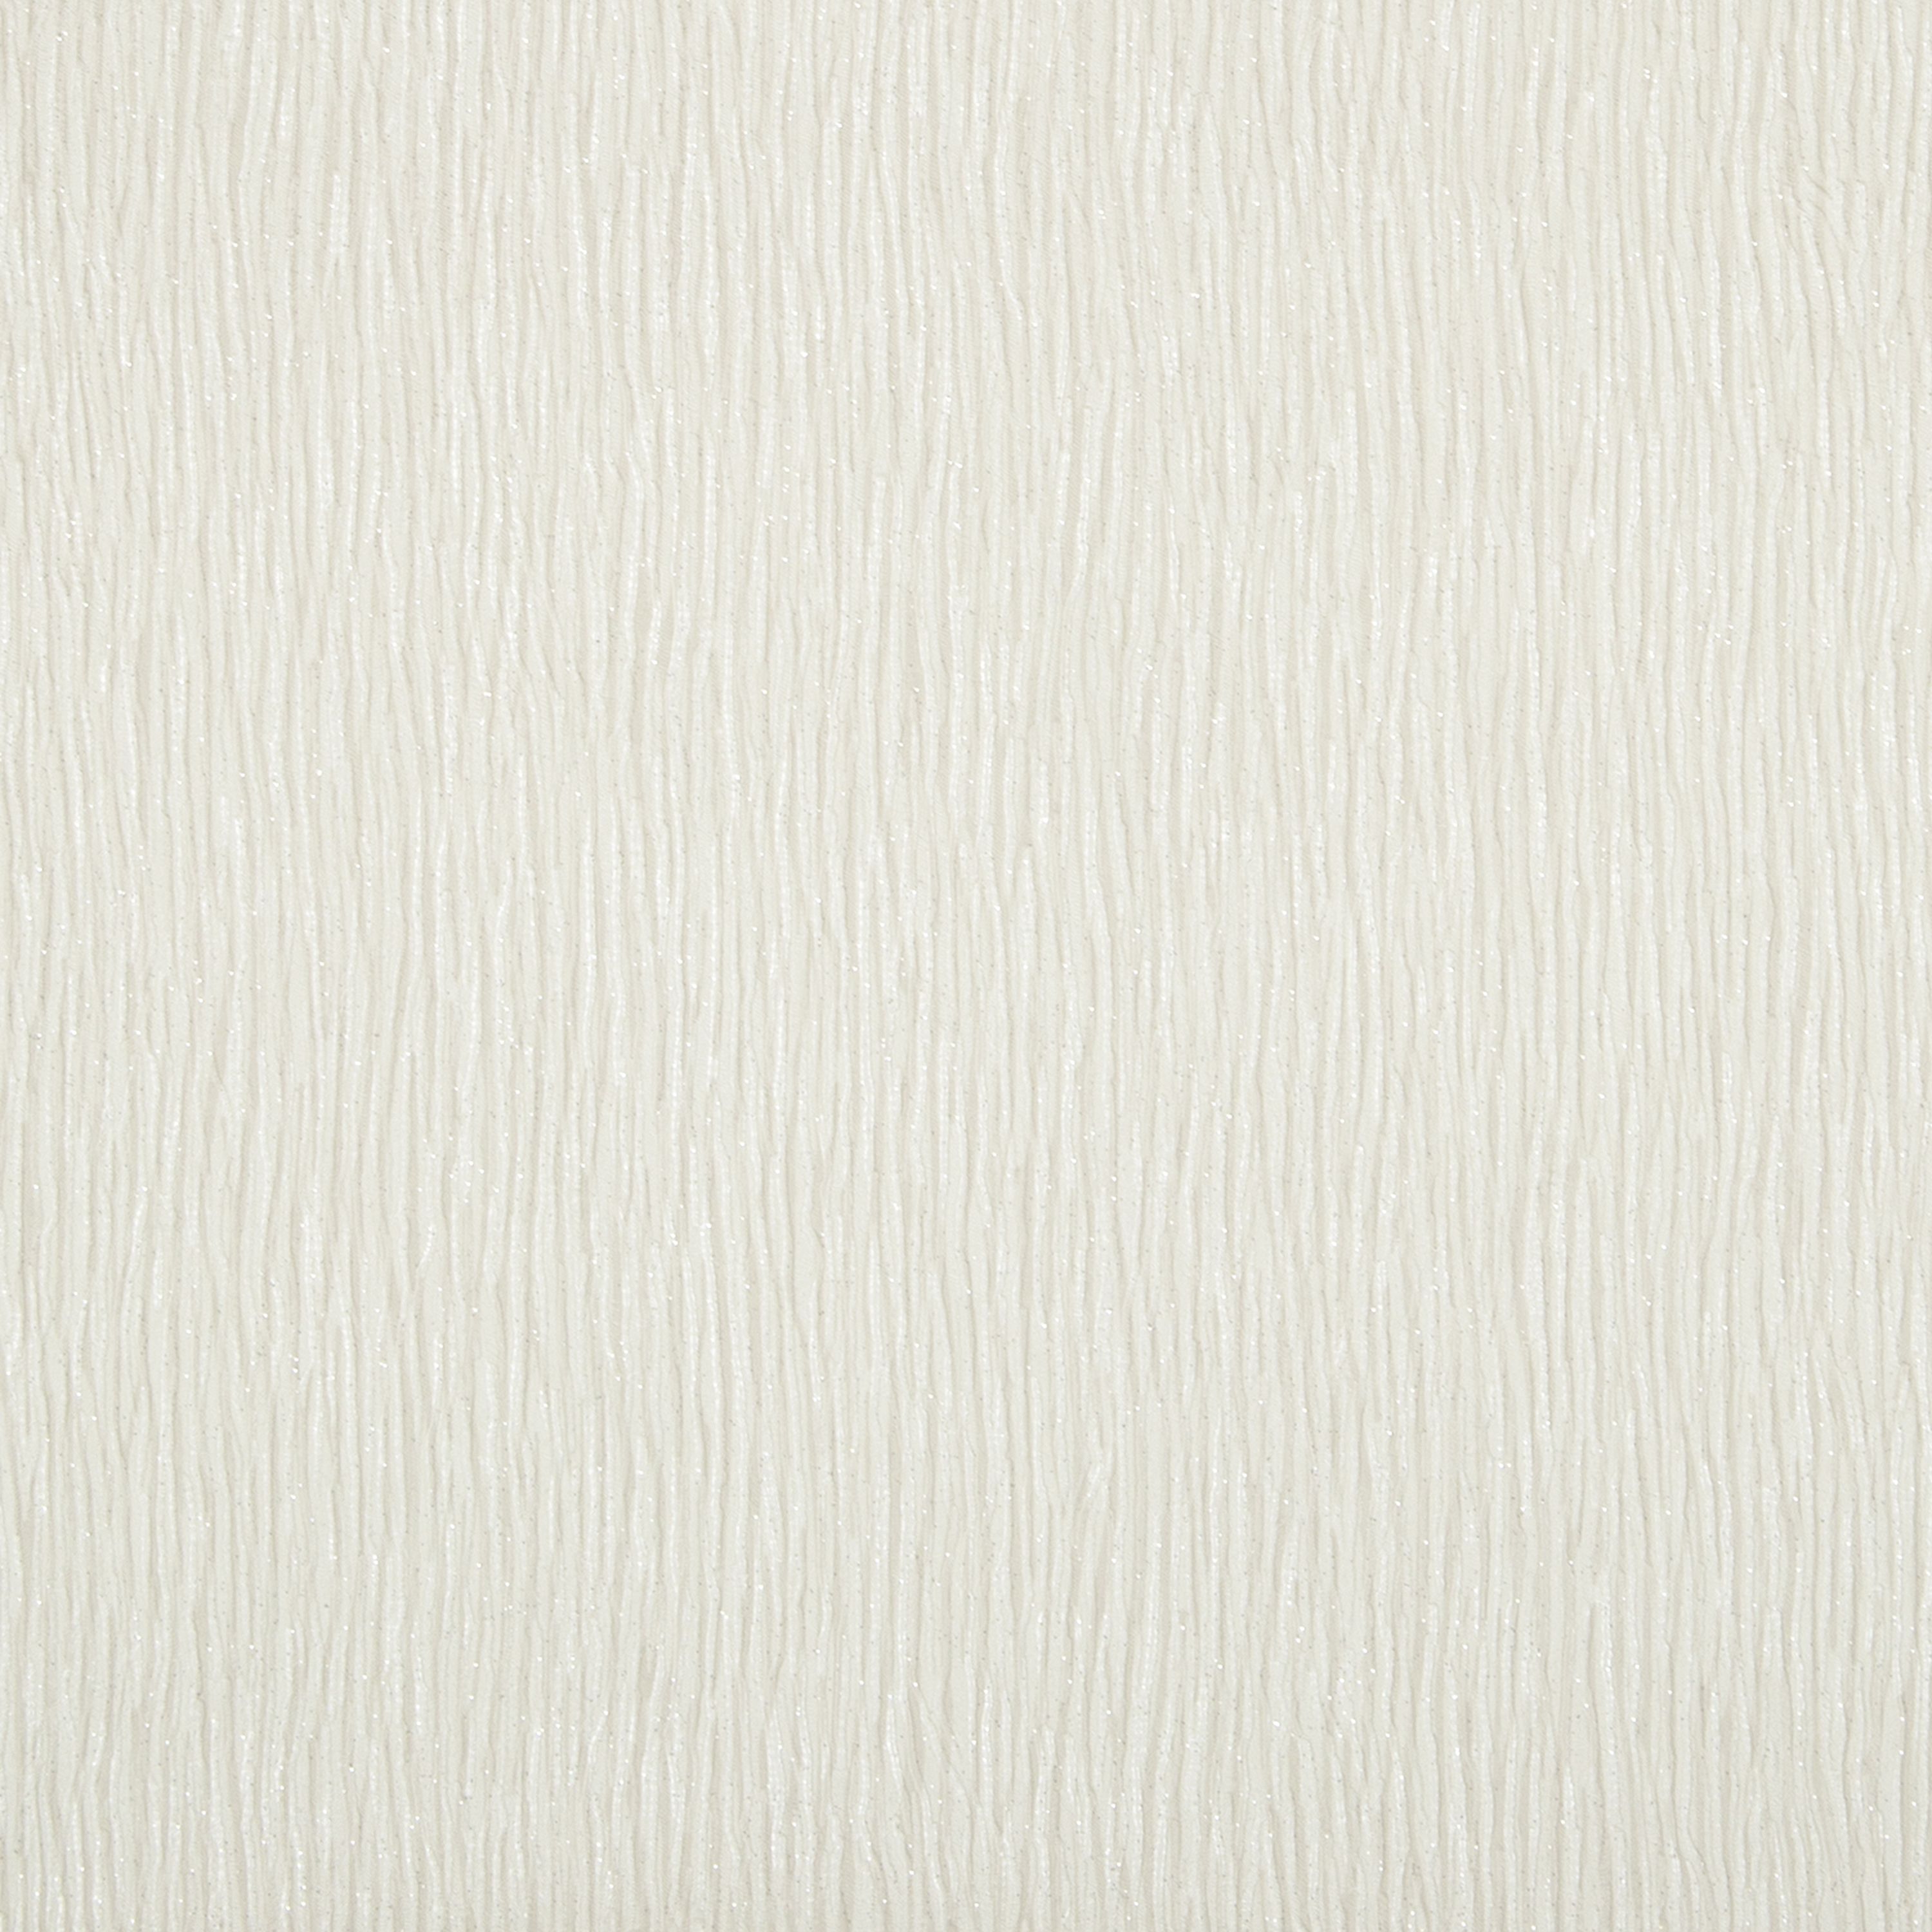 Boutique Shimmer Ivory Metallic & glitter effect Wave Textured Wallpaper